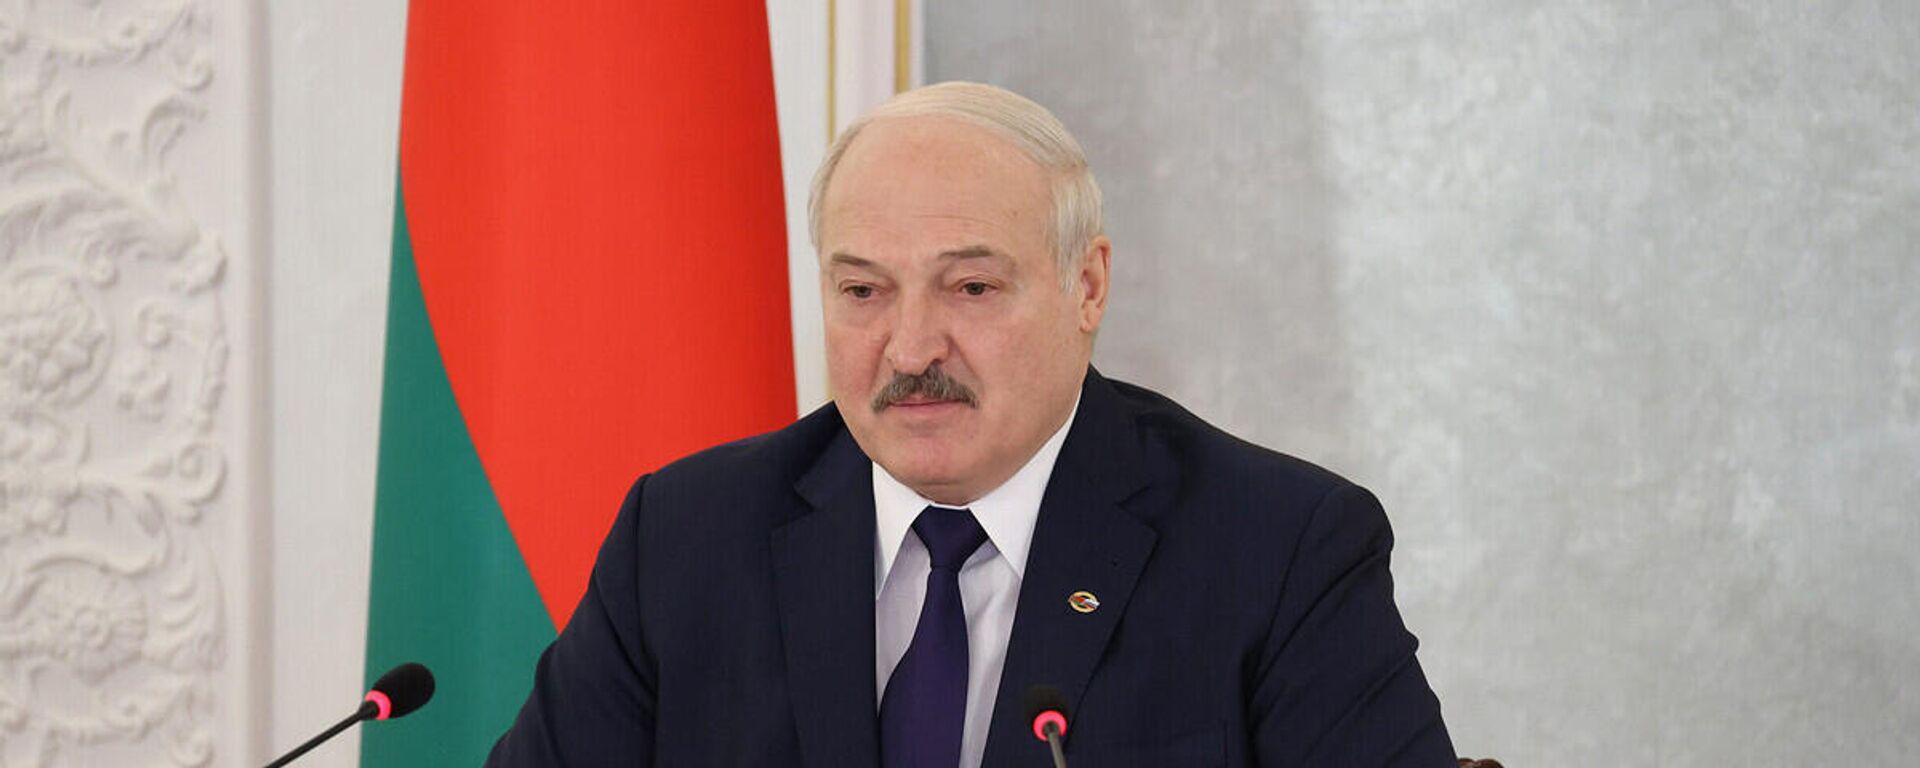 Baltarusijos prezidentas Aleksandras Lukašenka - Sputnik Lietuva, 1920, 15.11.2021